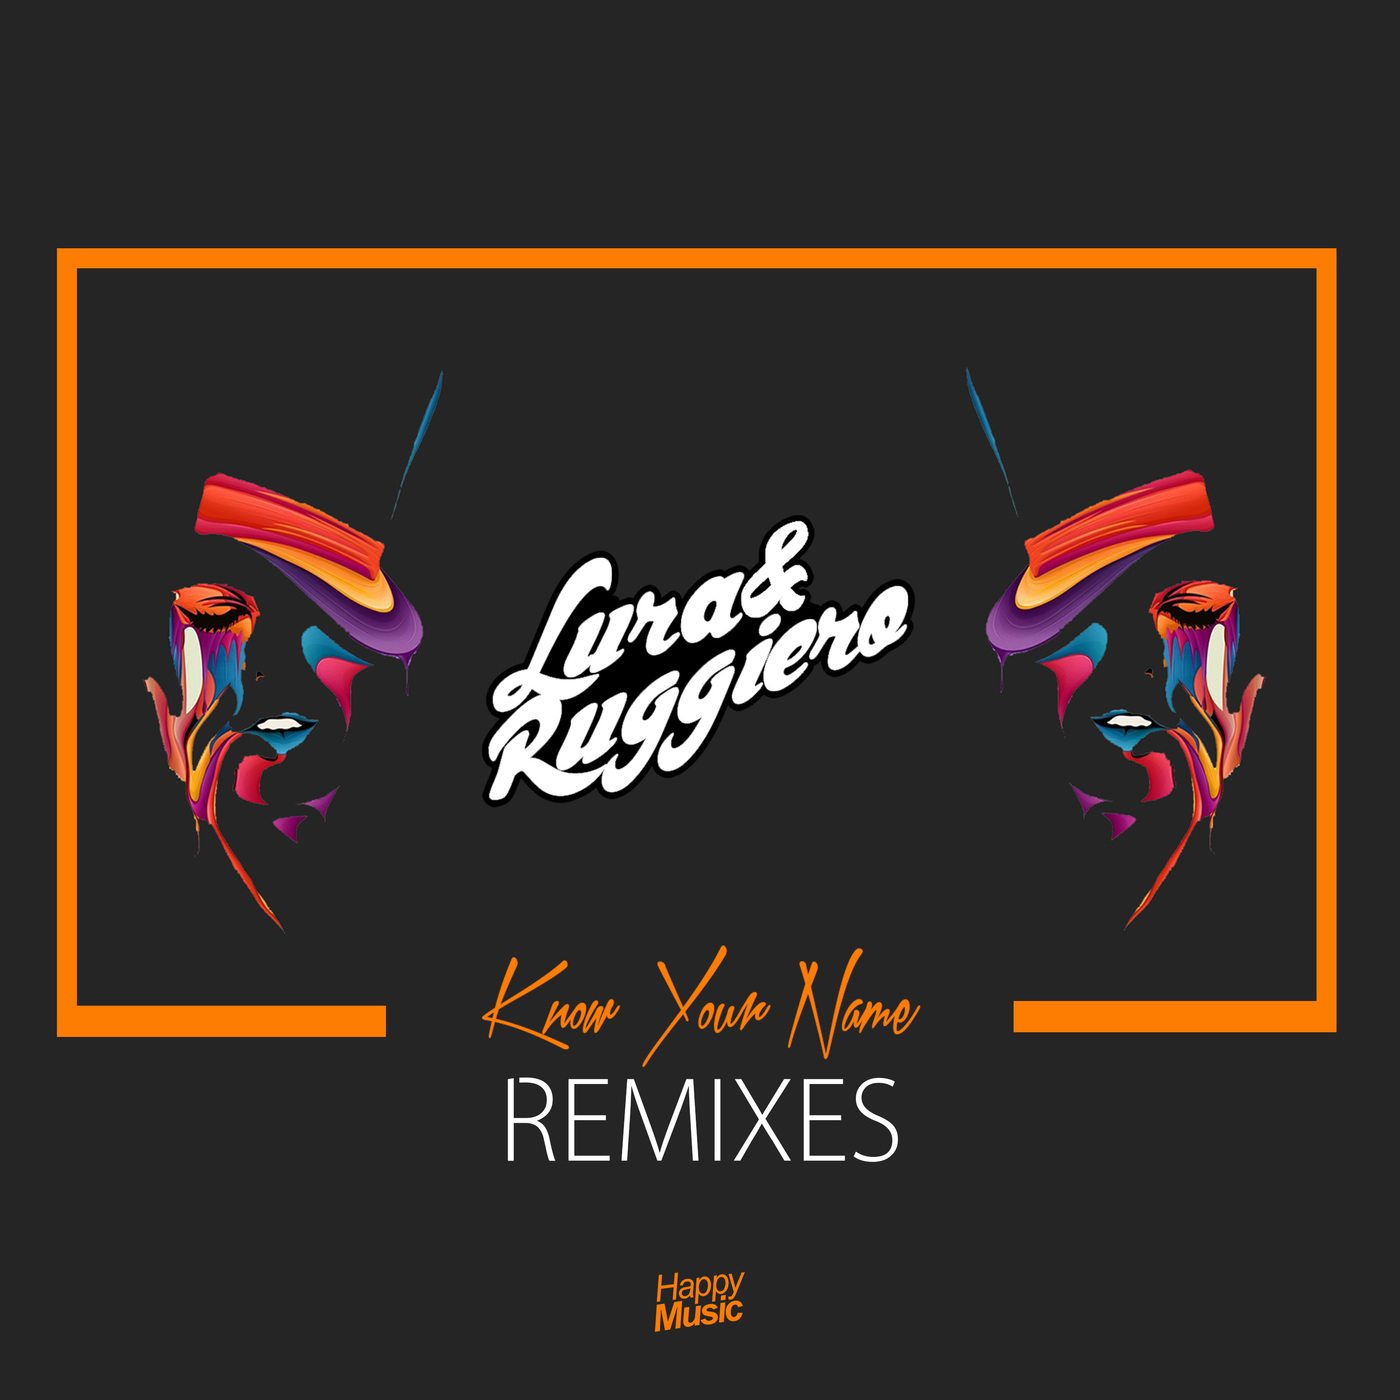 Lura & Ruggiero - Know Your Name (Remixes) / Happy Music